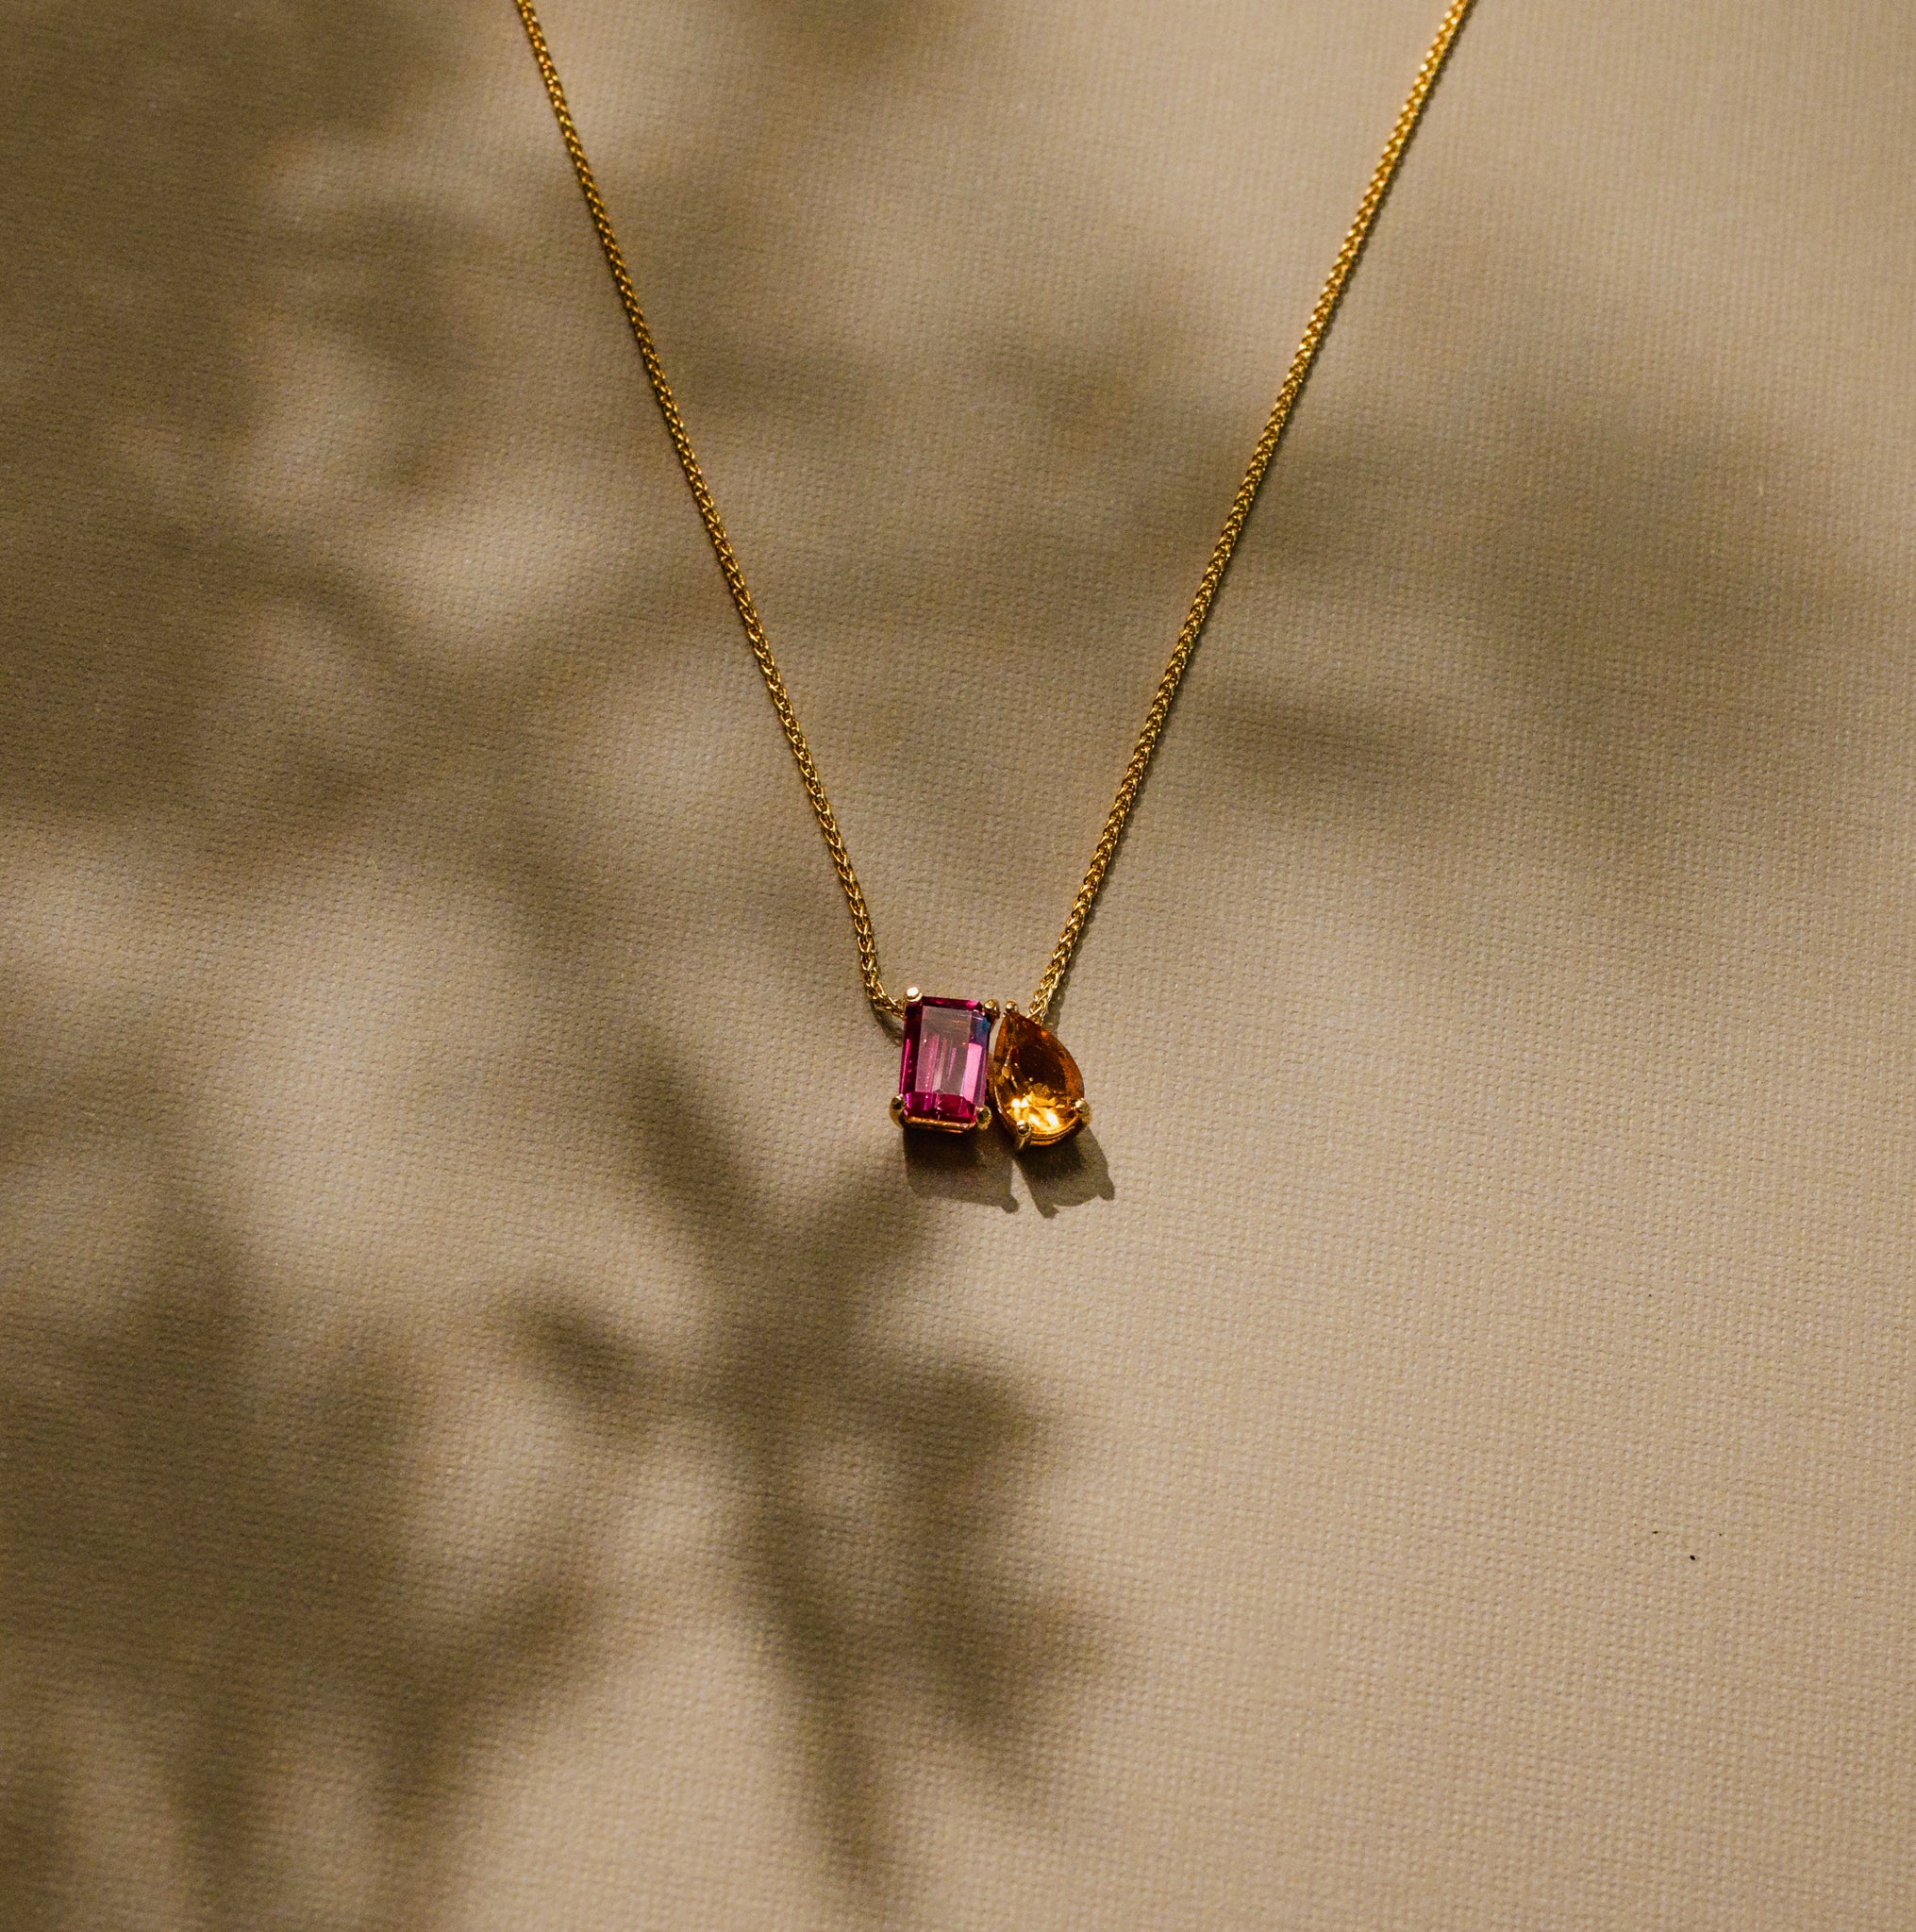 The Two Stone Custom Gemstone Necklace